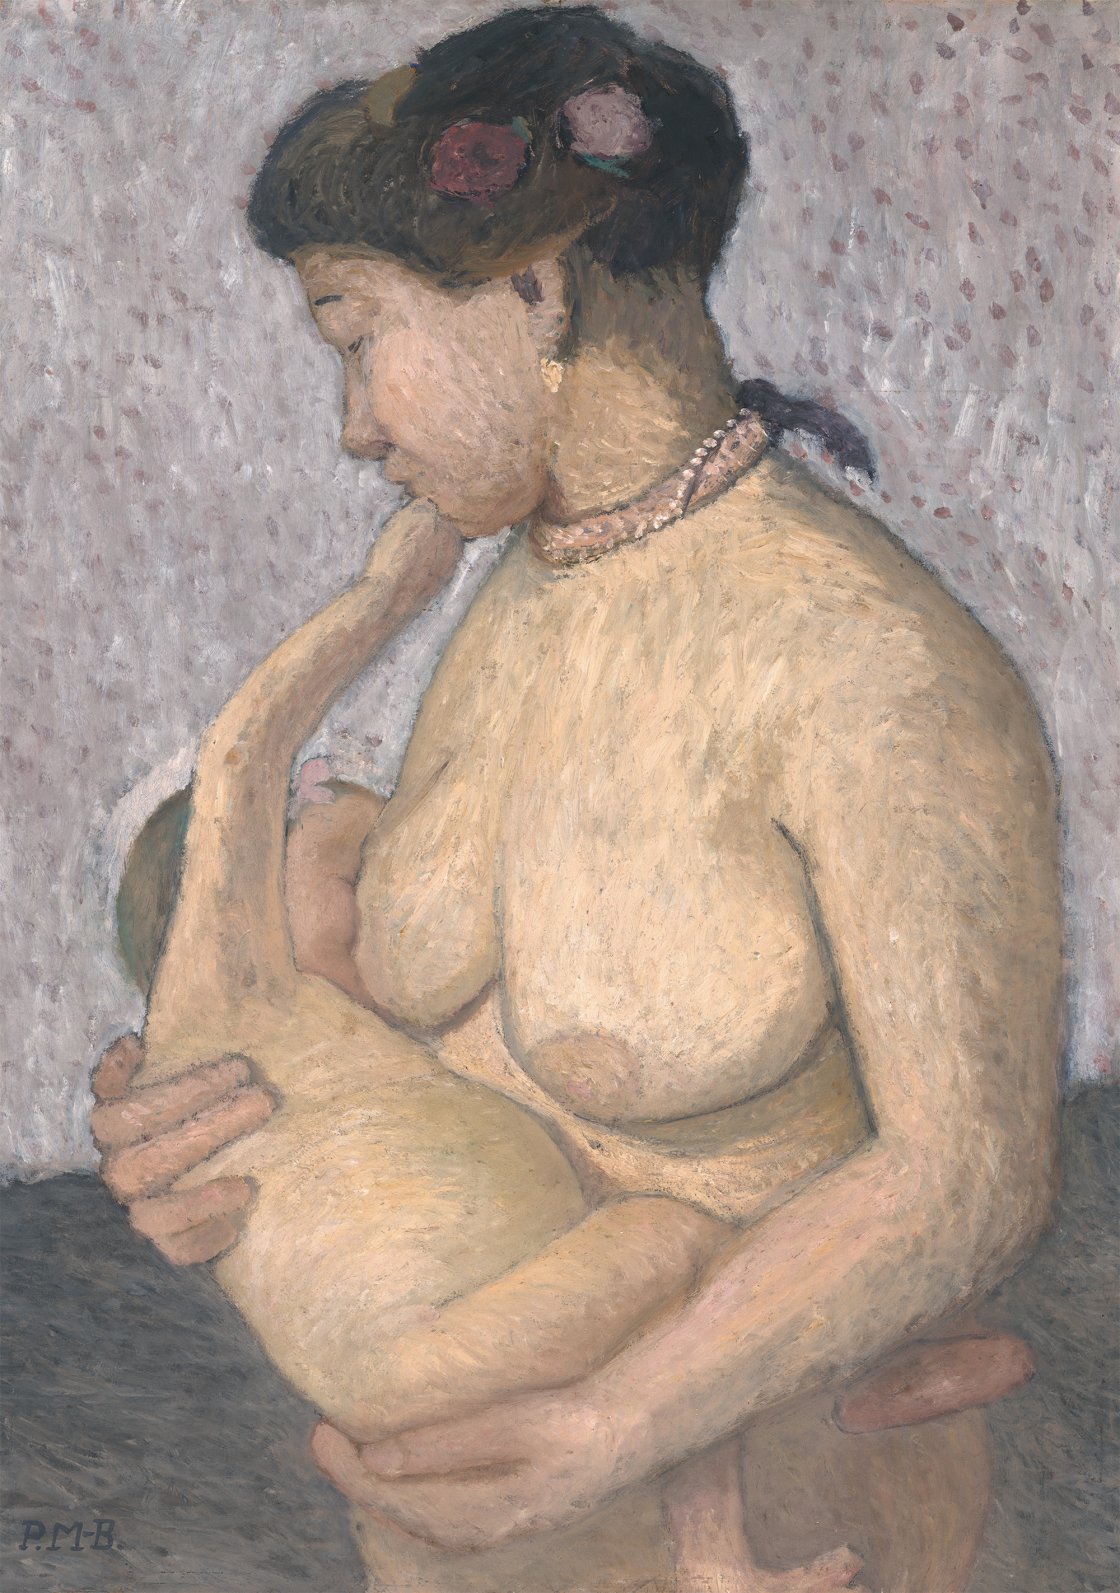 Paula Modersohn-Becker. Mother and Child, Half Figure